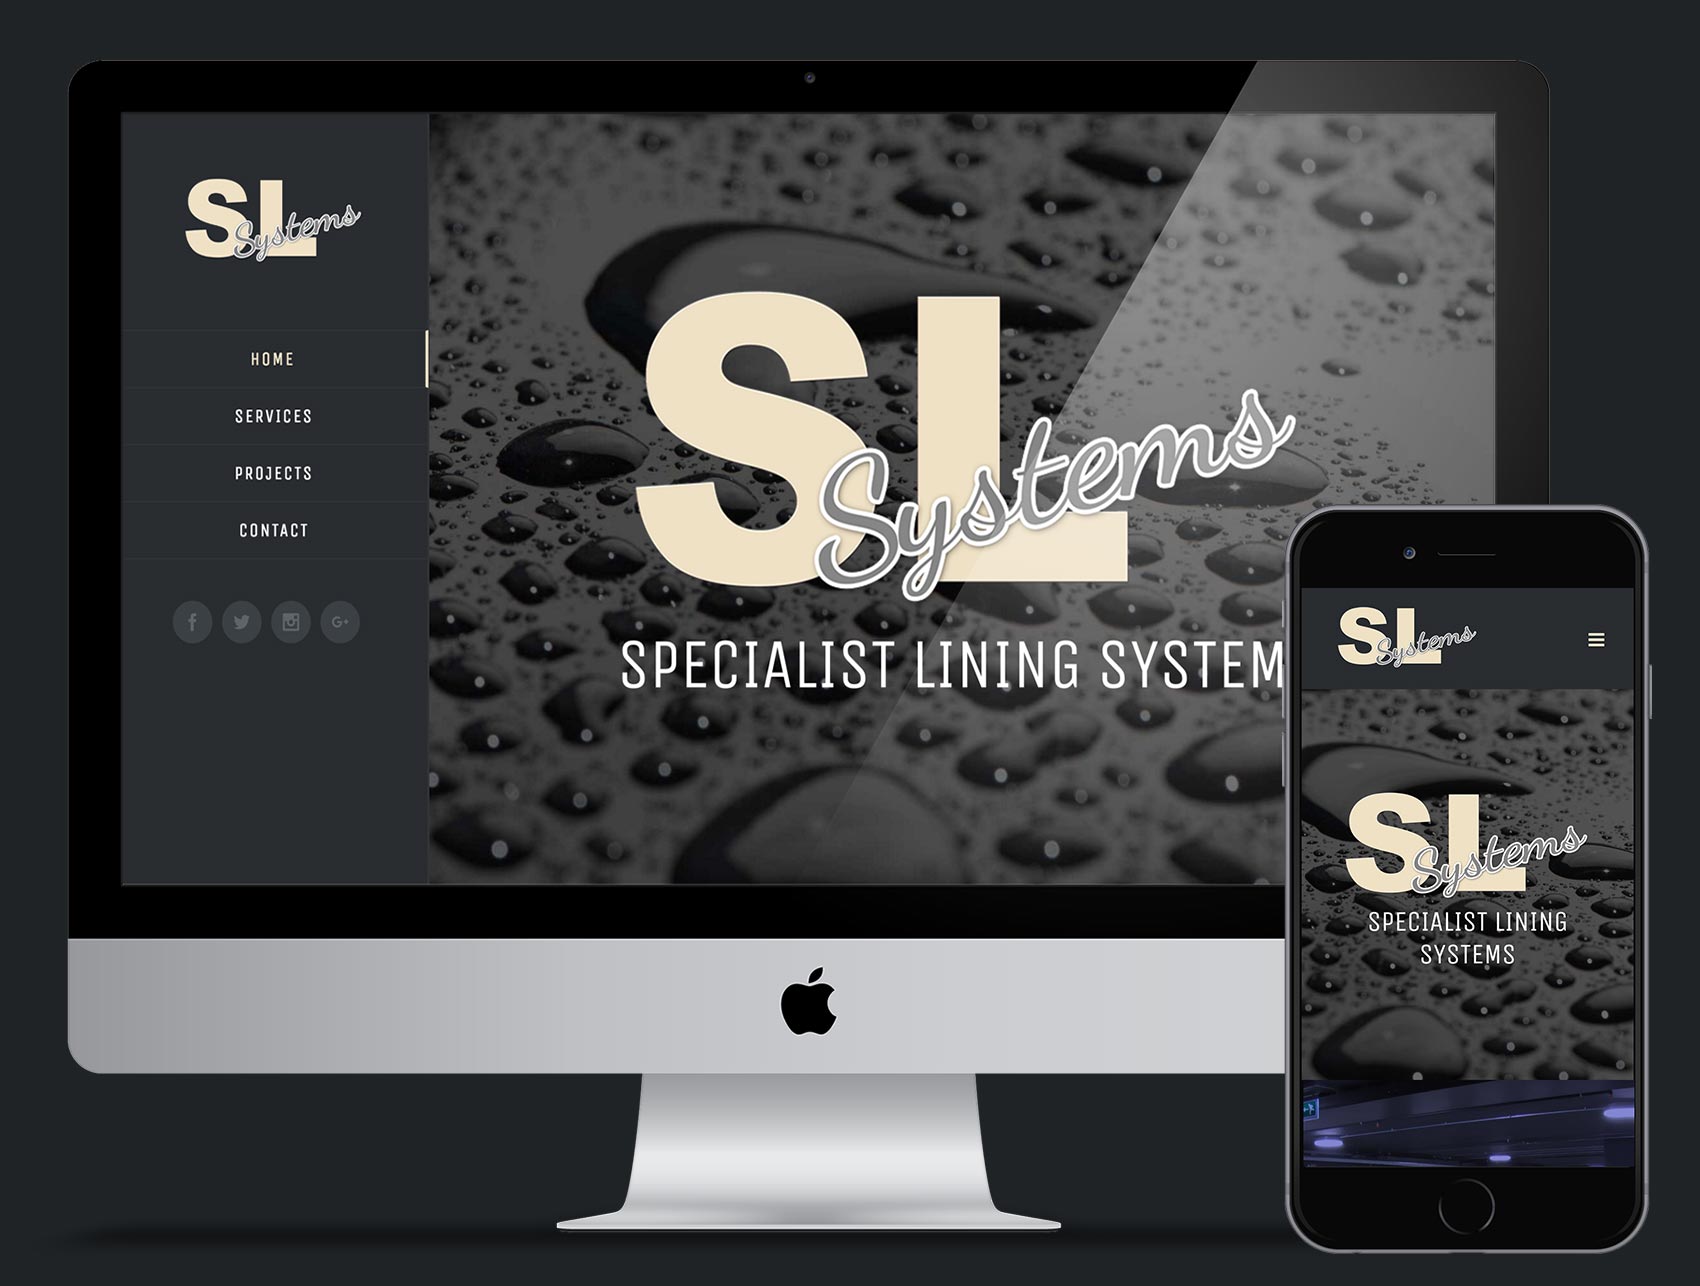 SL Systems website design and build. Using the Wordpress platform